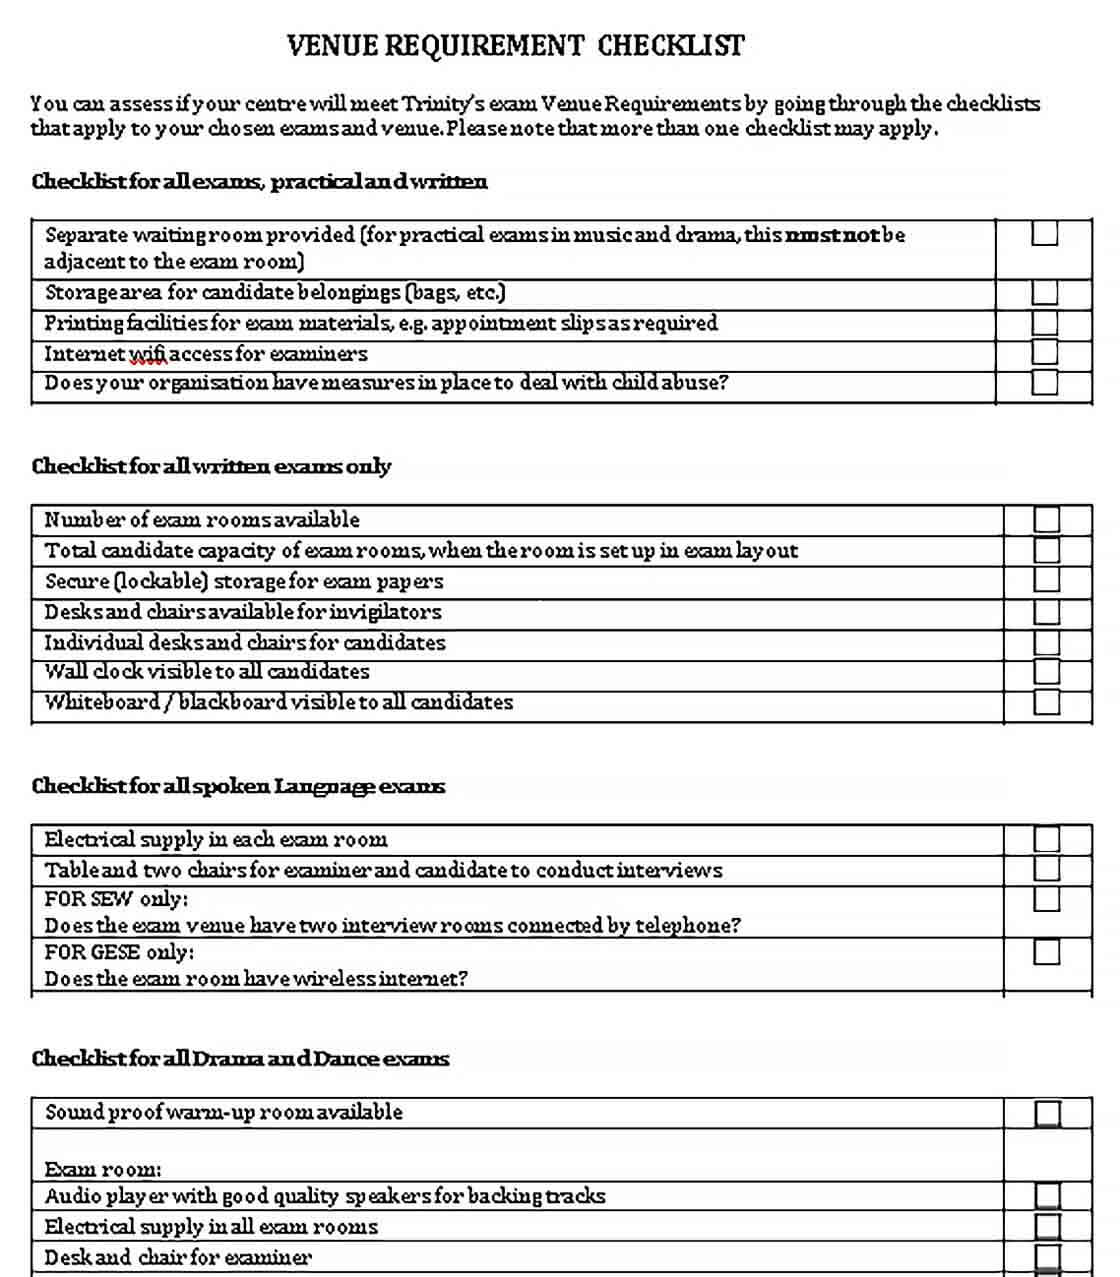 Sample Venue Requirement Checklist